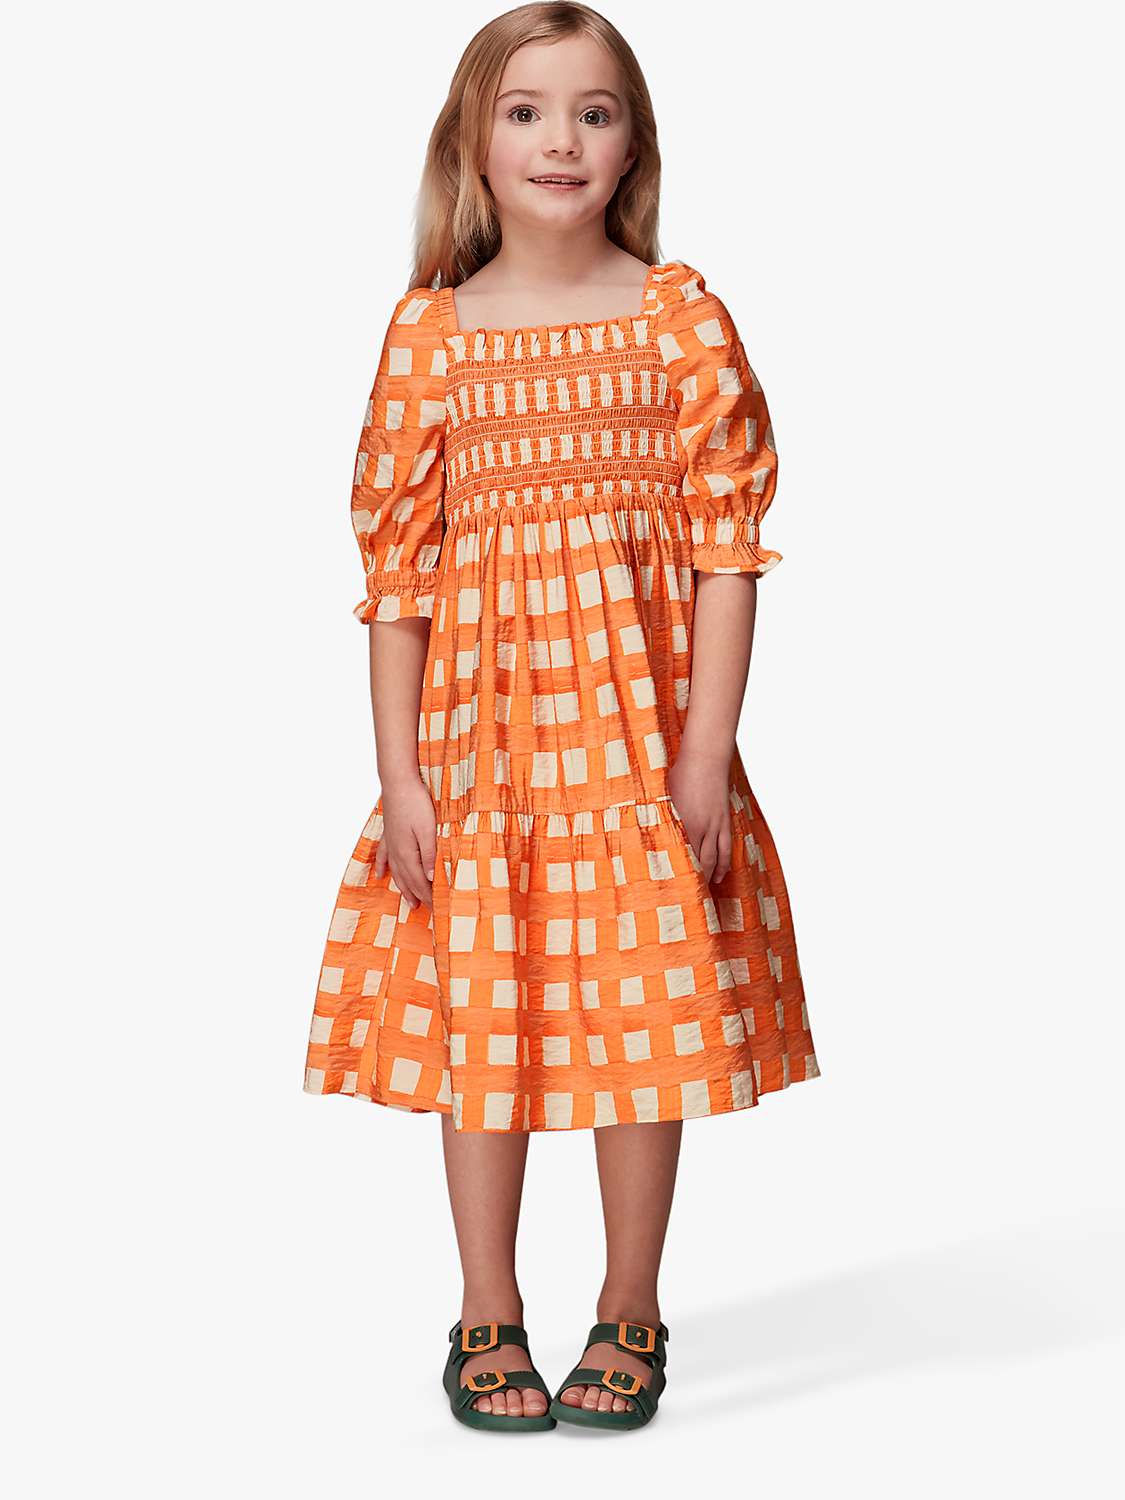 Buy Whistles Kids' Eden Smocked Bodice Dress Online at johnlewis.com